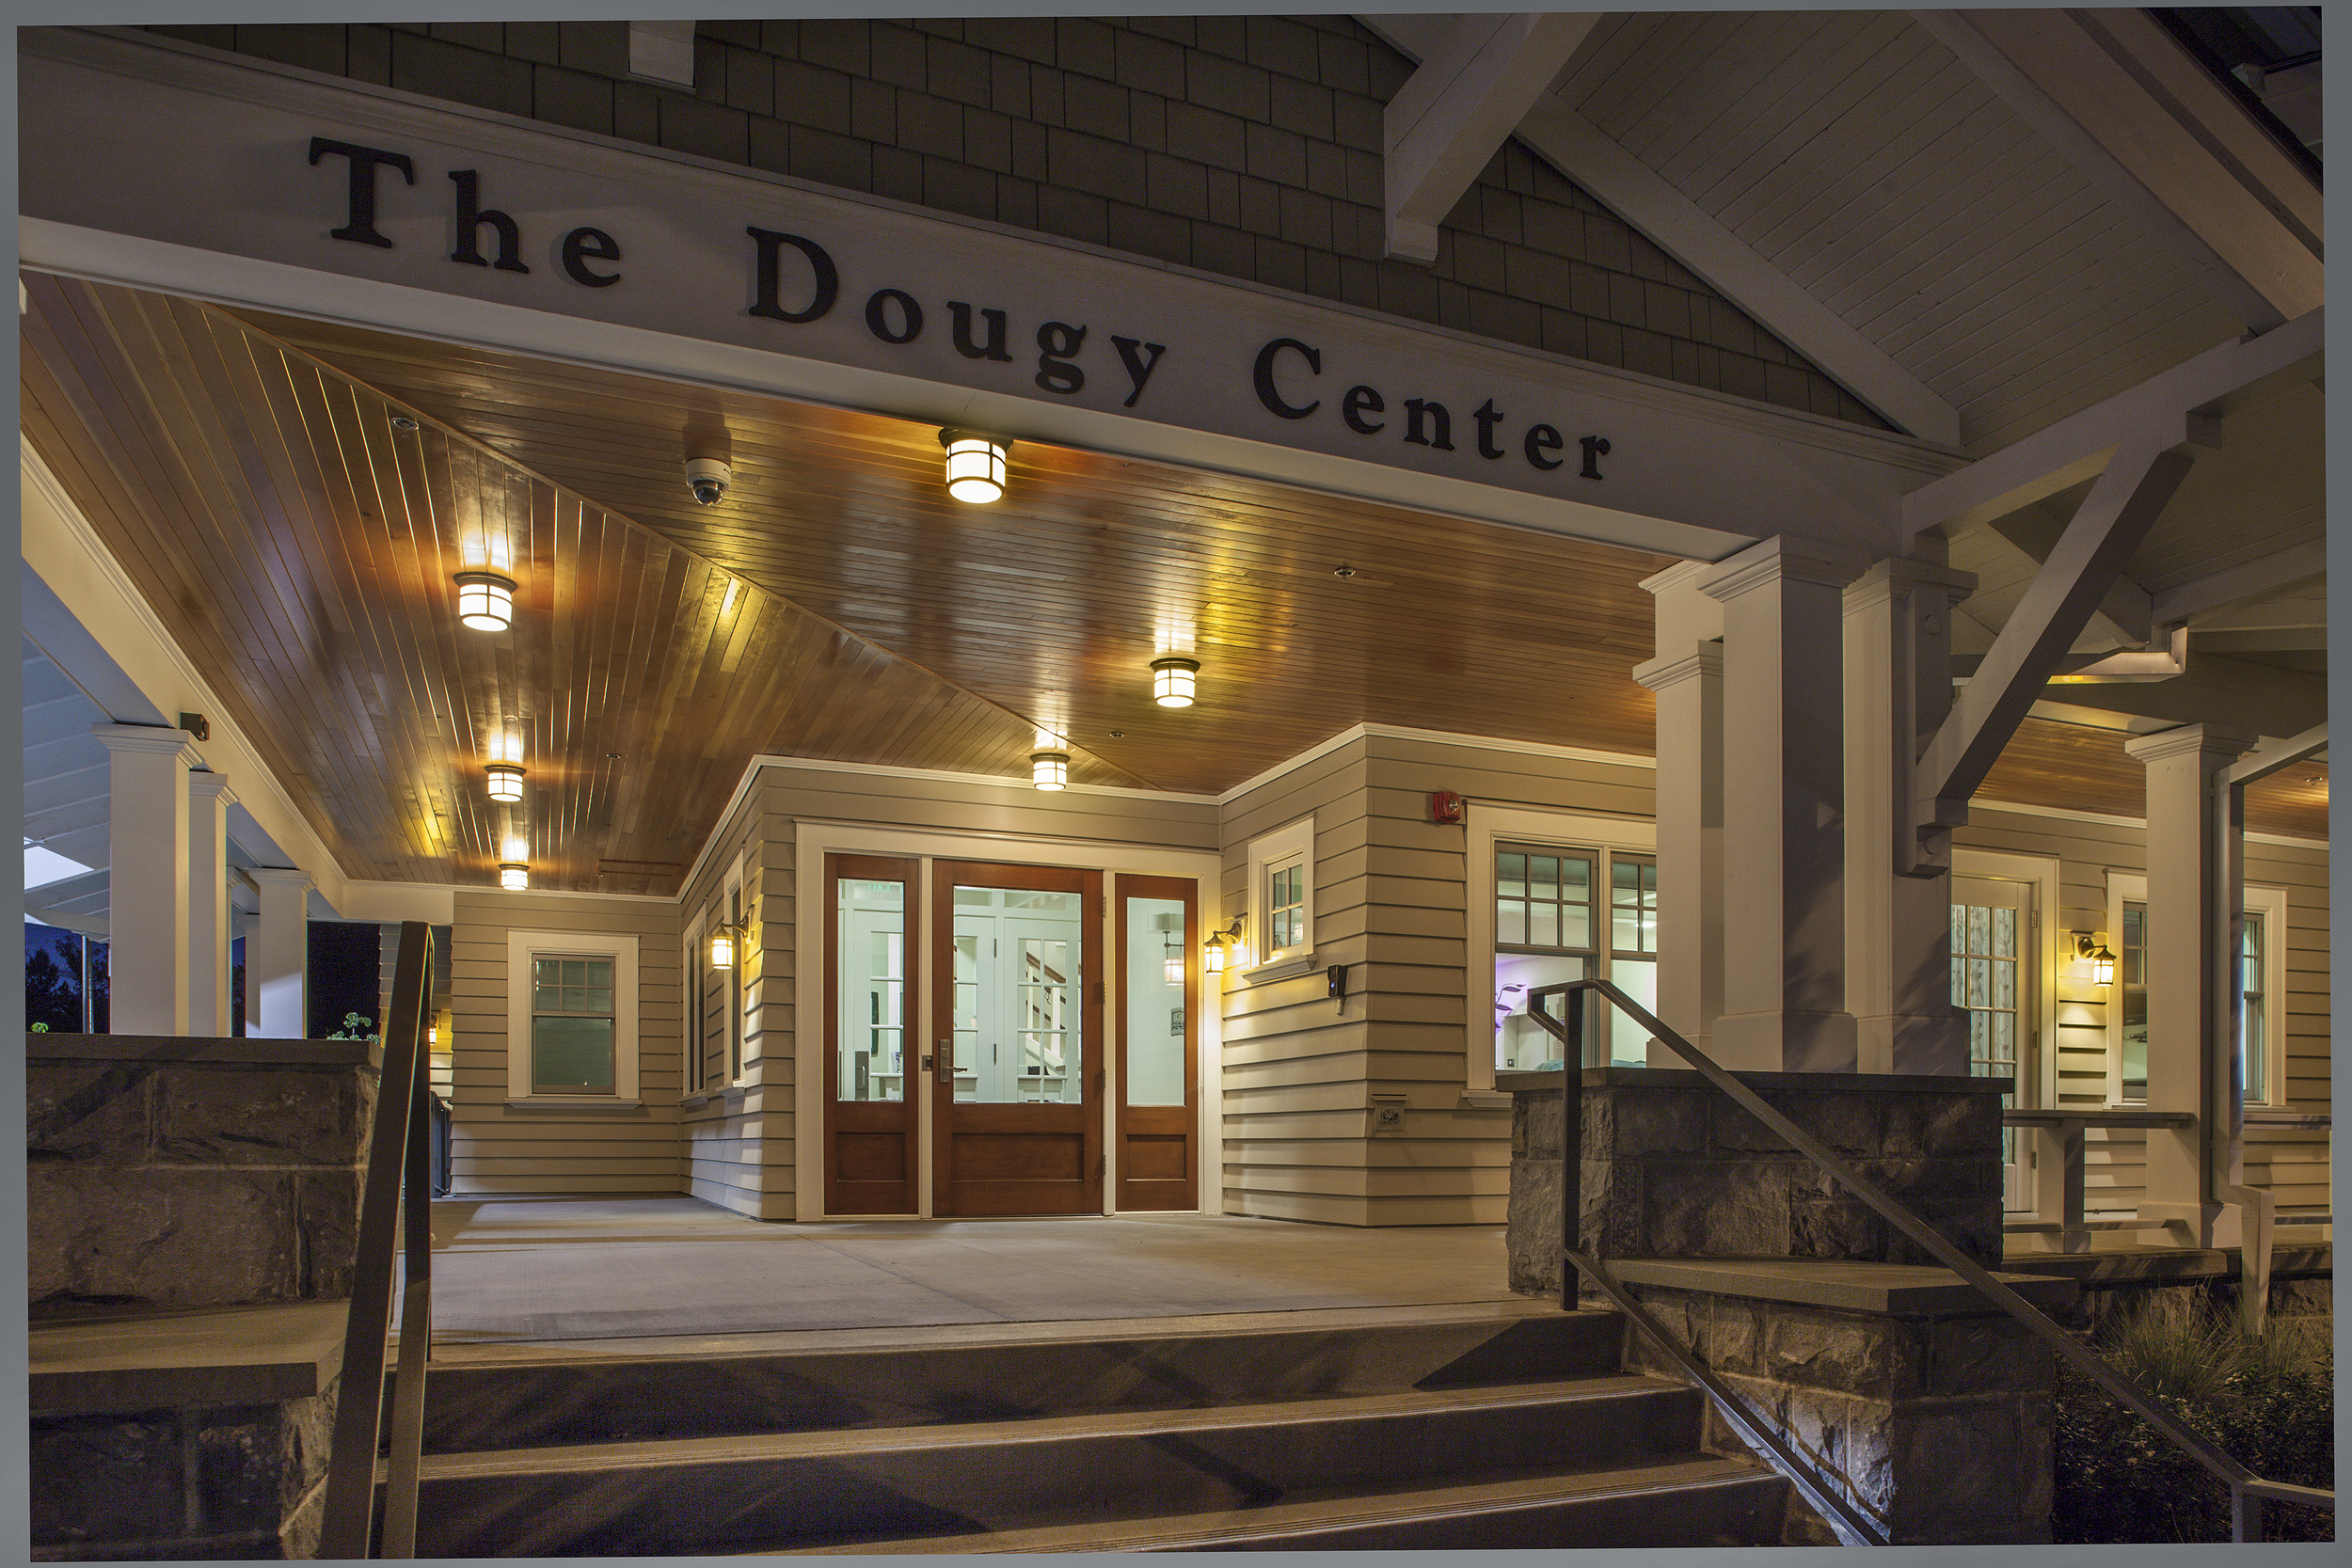  The Dougy Center  Scott Edwards Architecture 